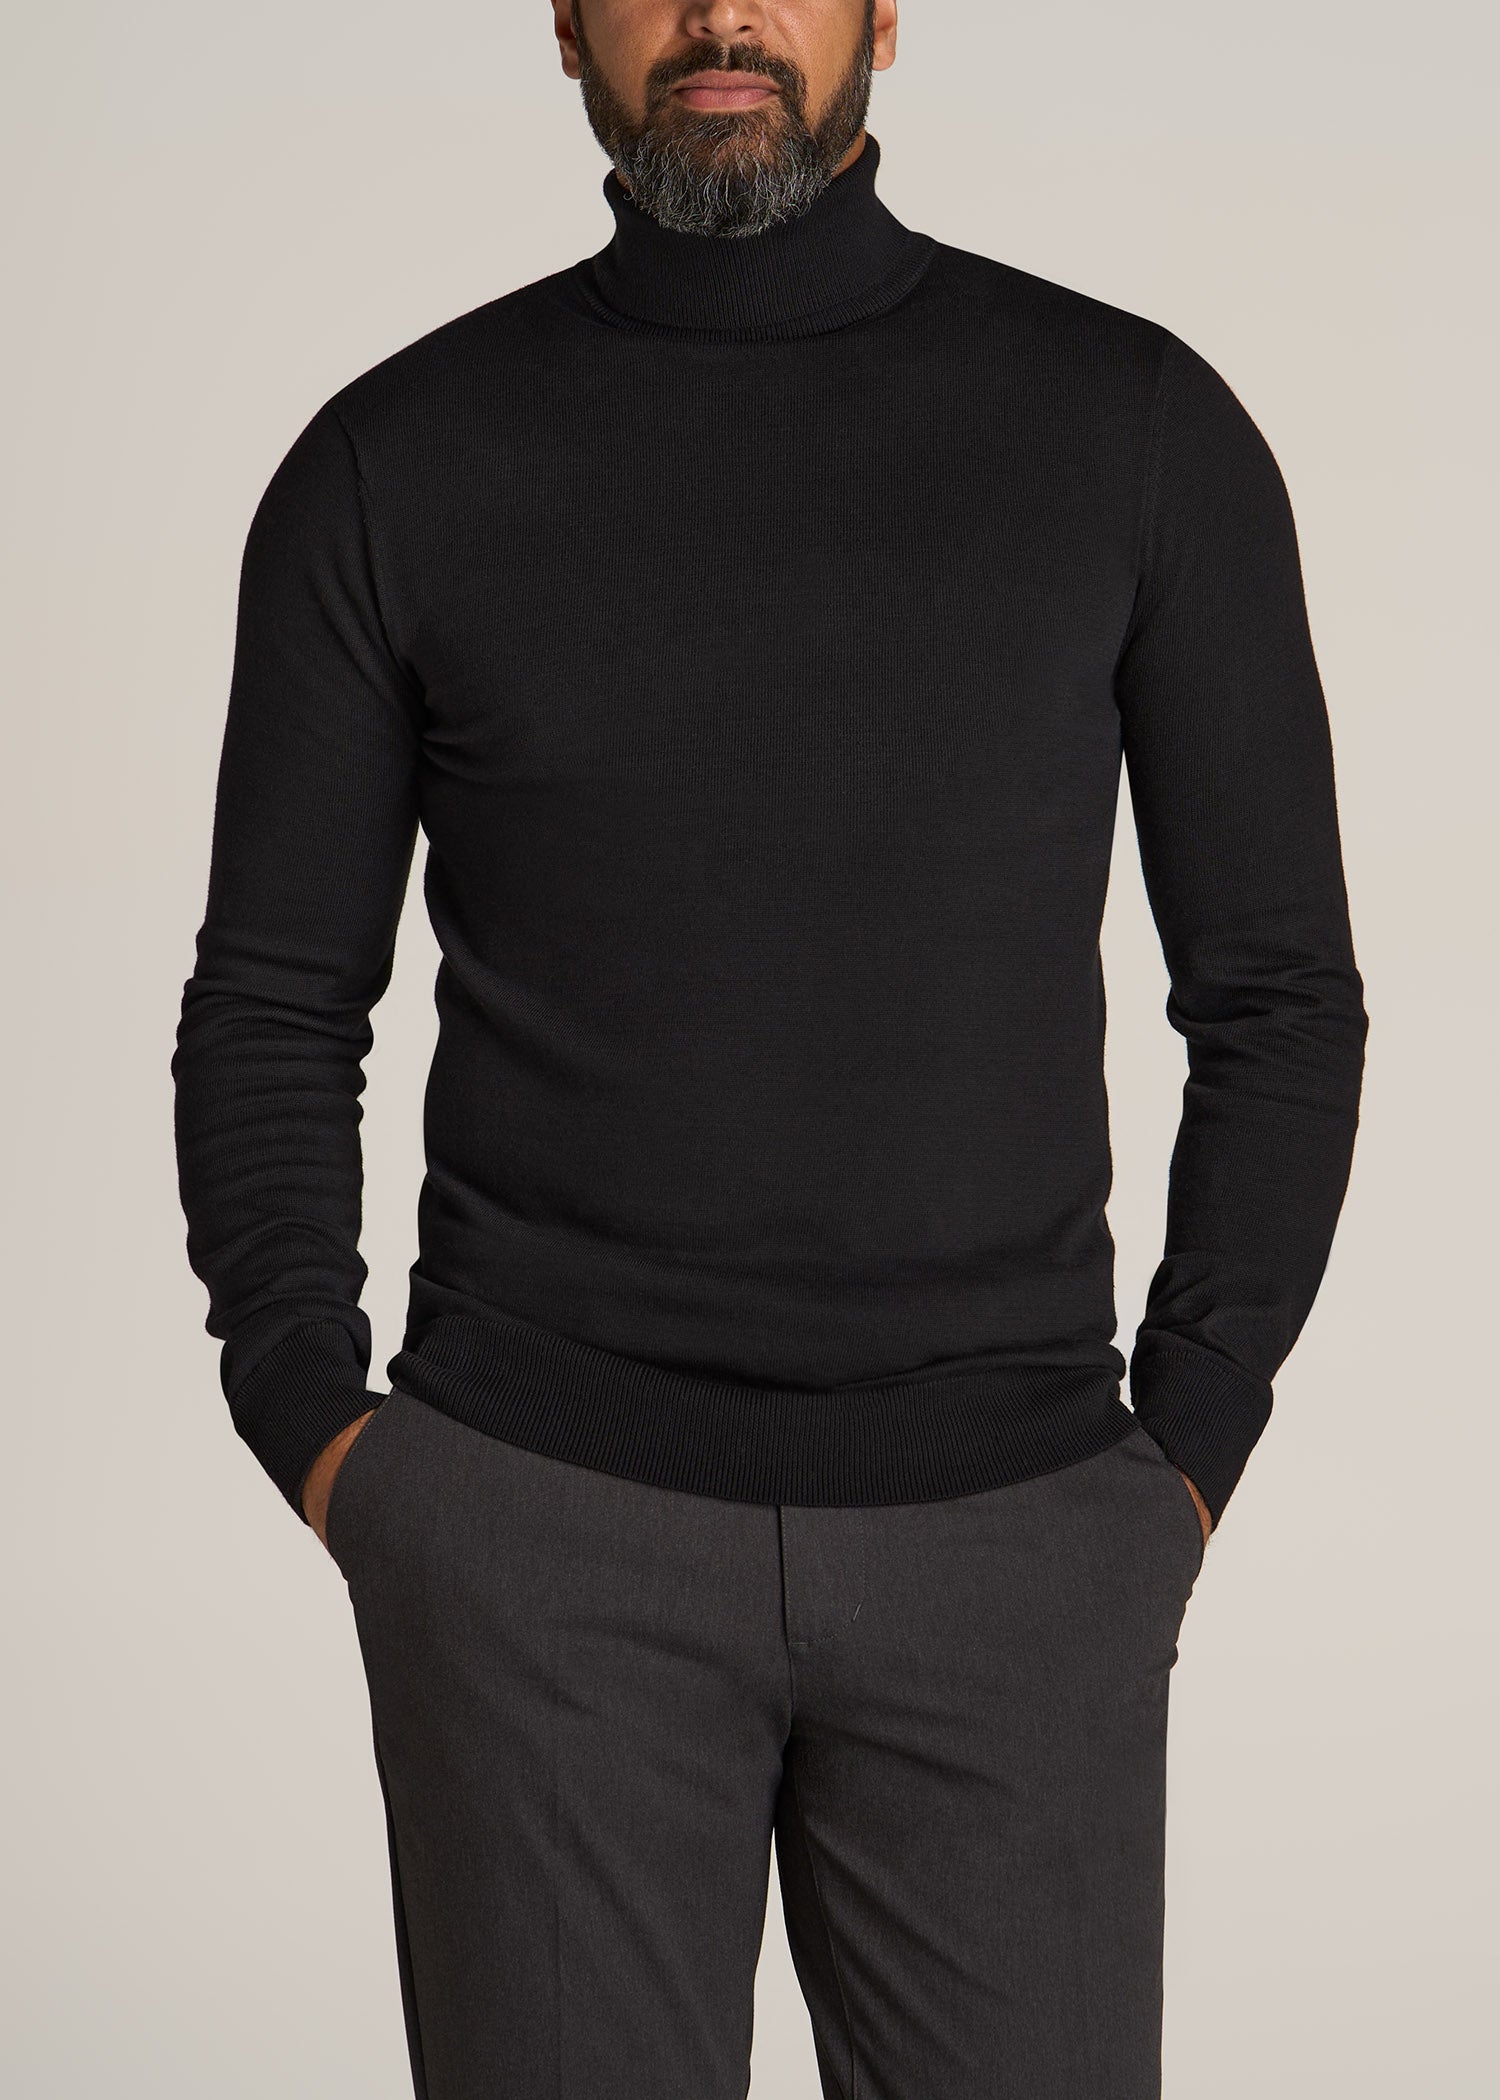 Men's Tall Turtleneck Sweater